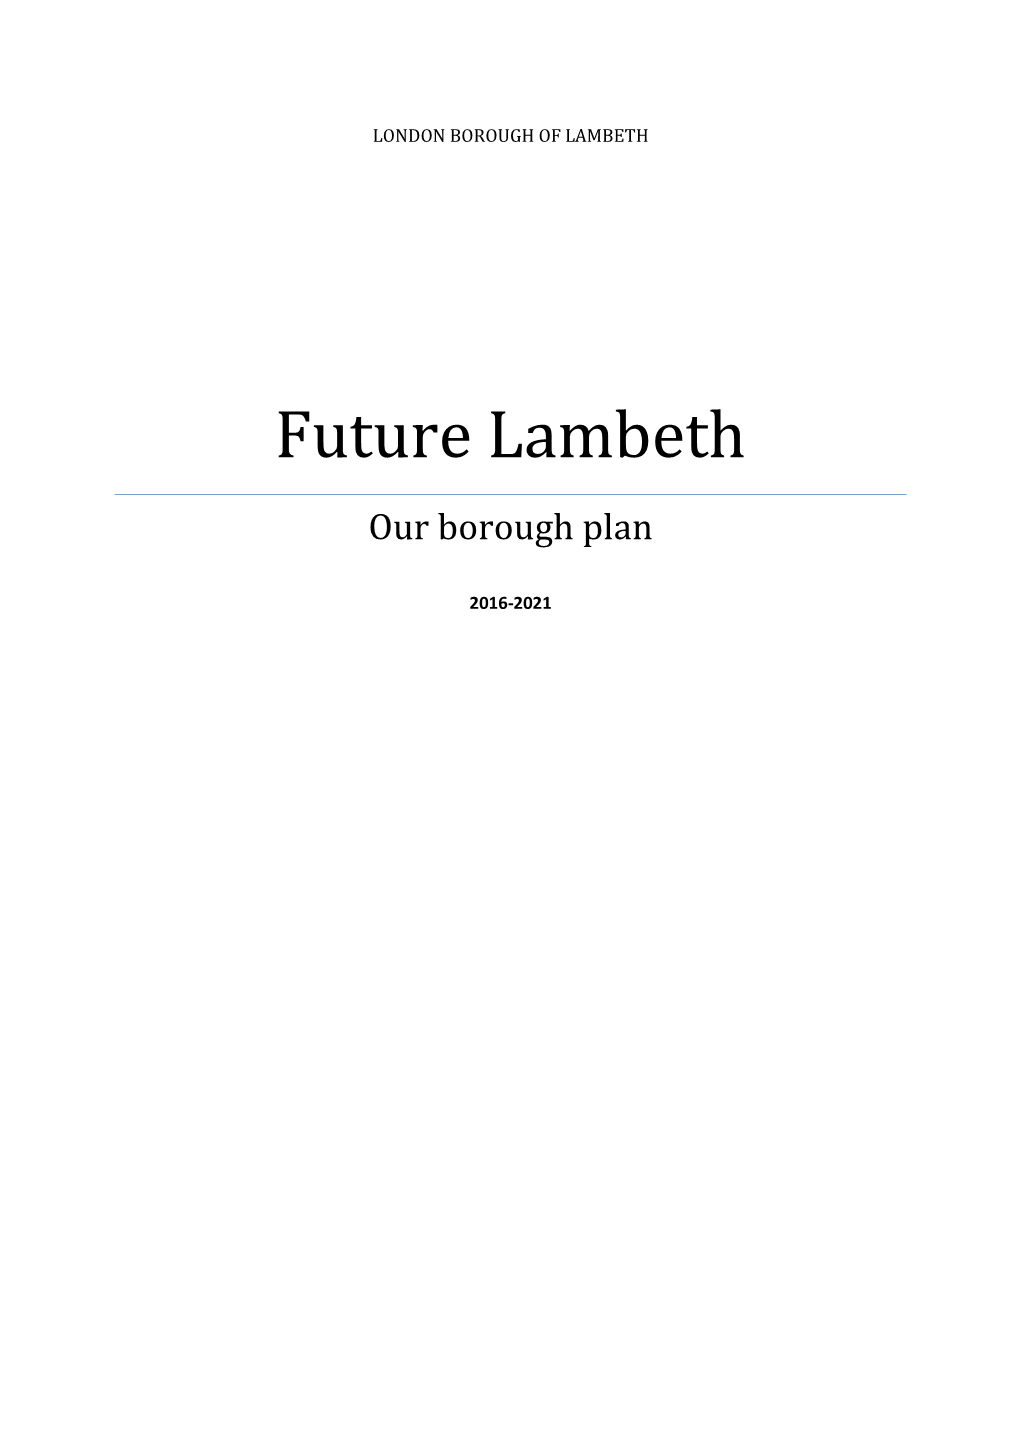 Future Lambeth Our Borough Plan